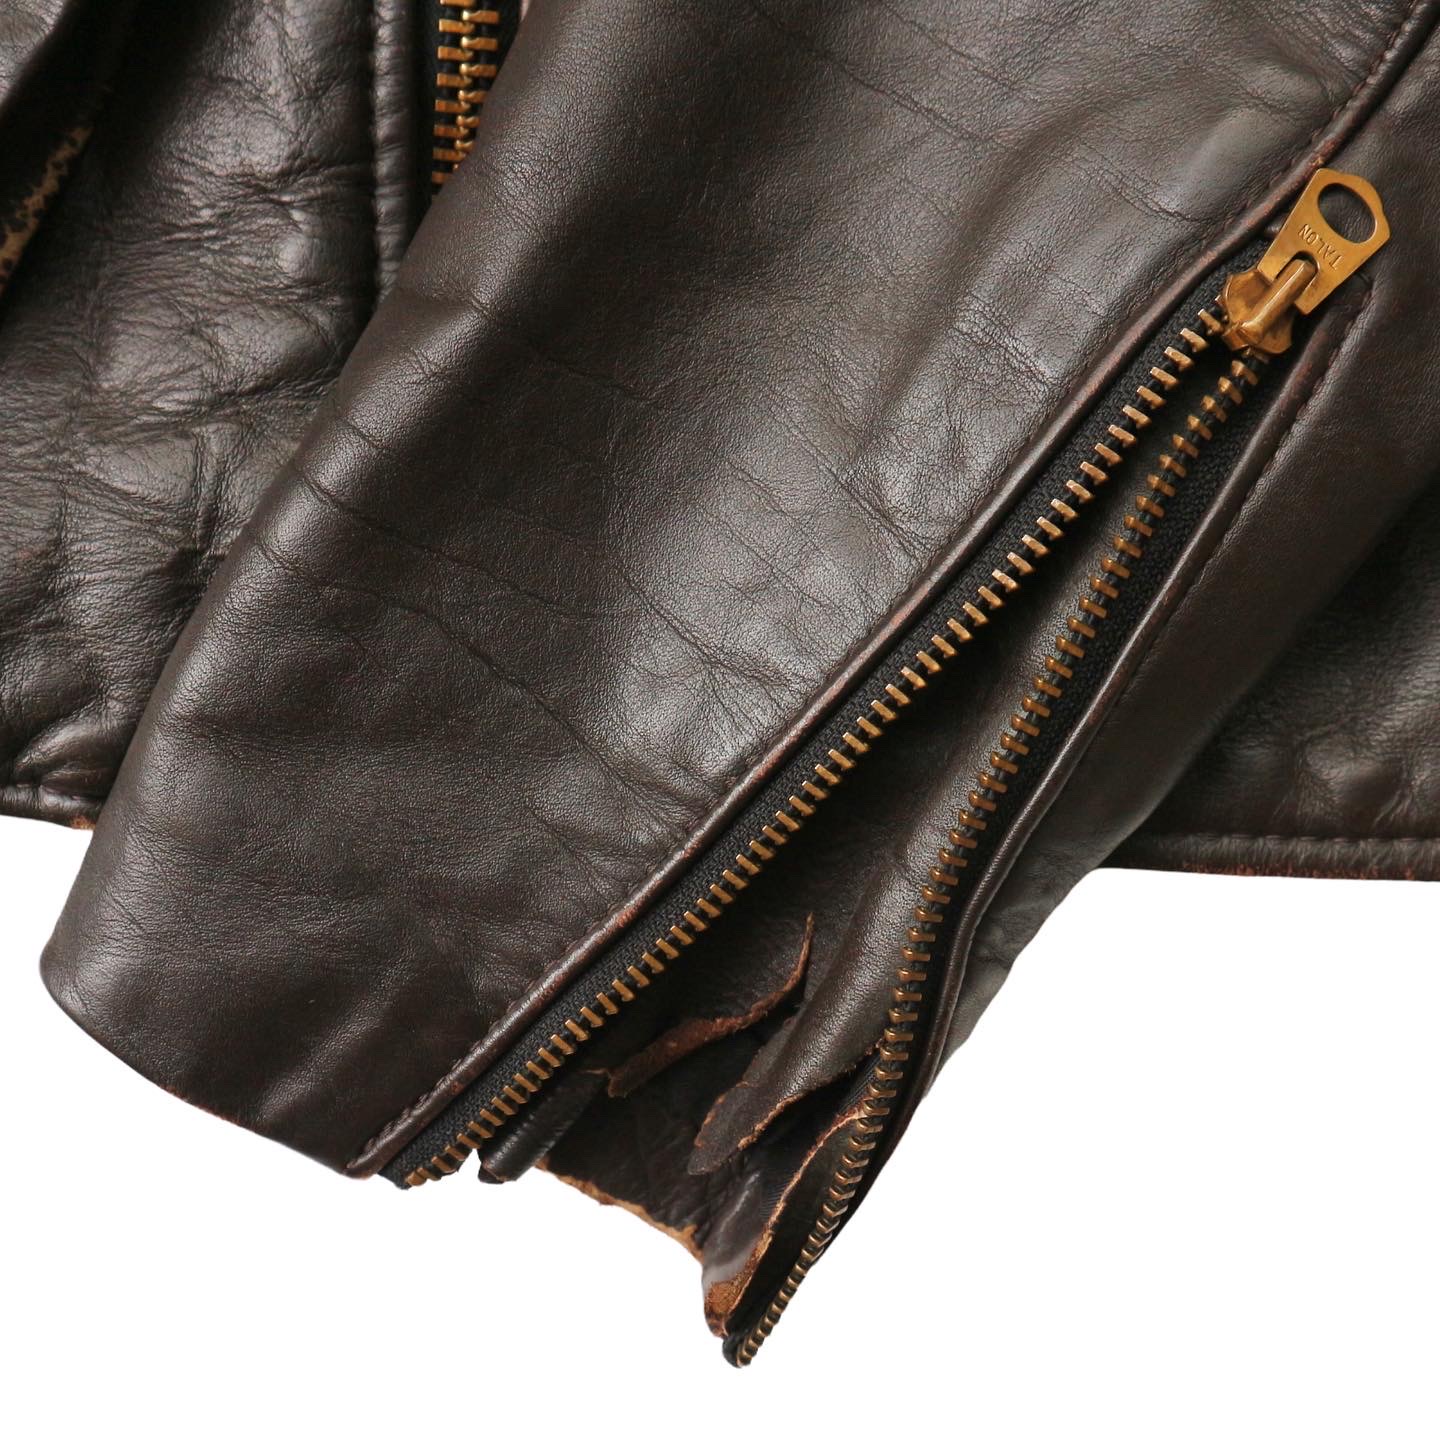 Vanson Racer Leather Jacket Size M